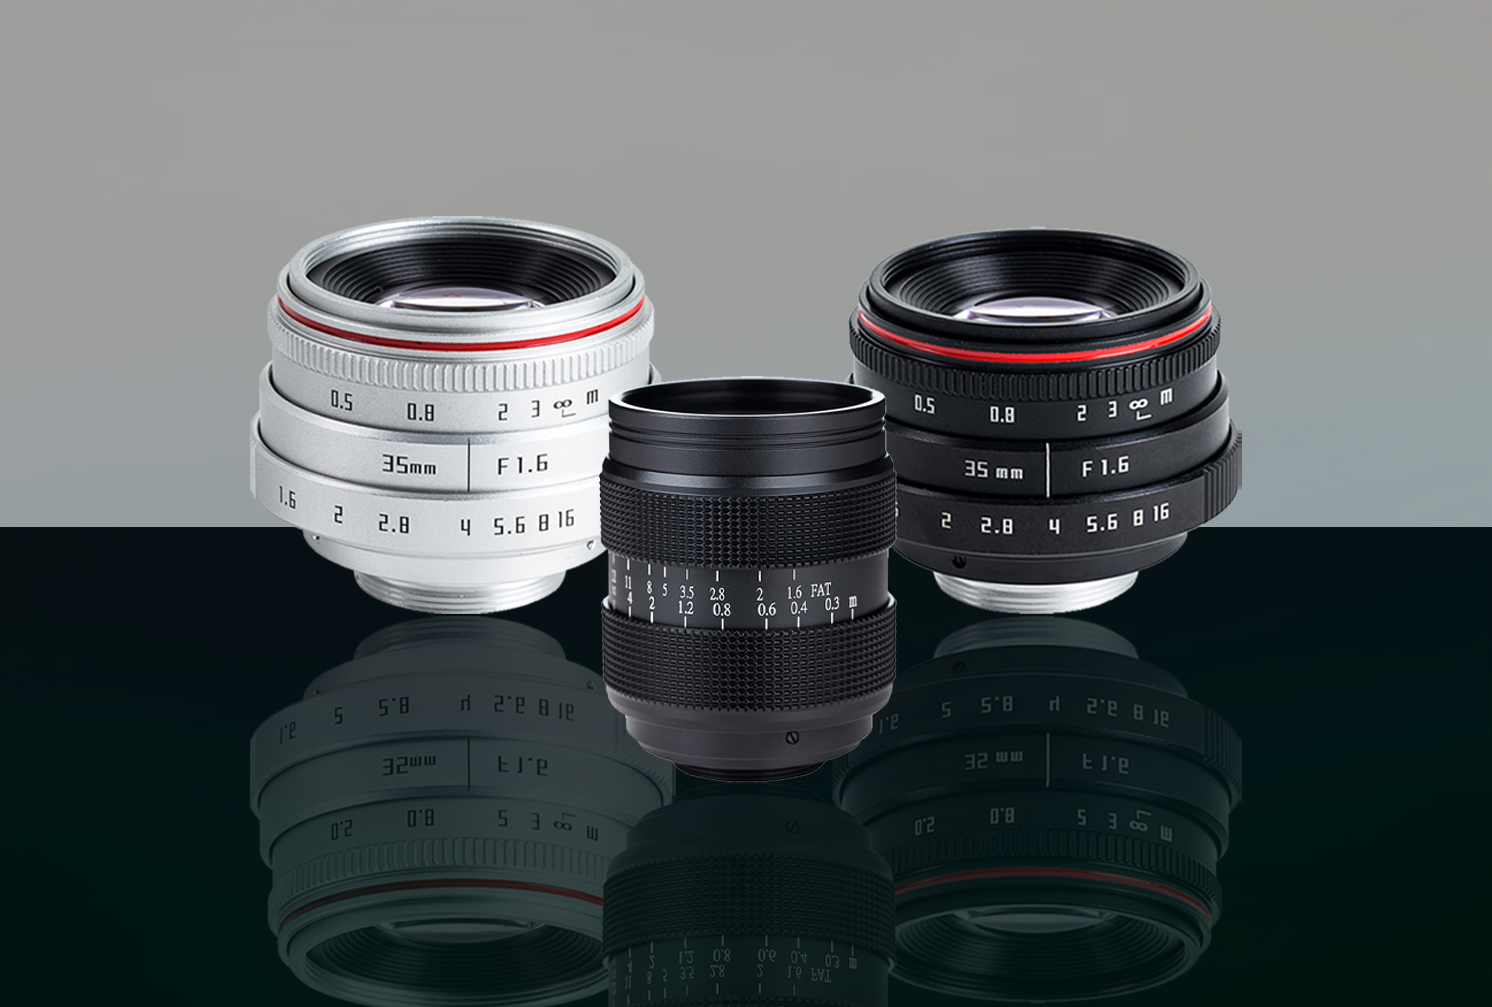 APS-C series camera lenses